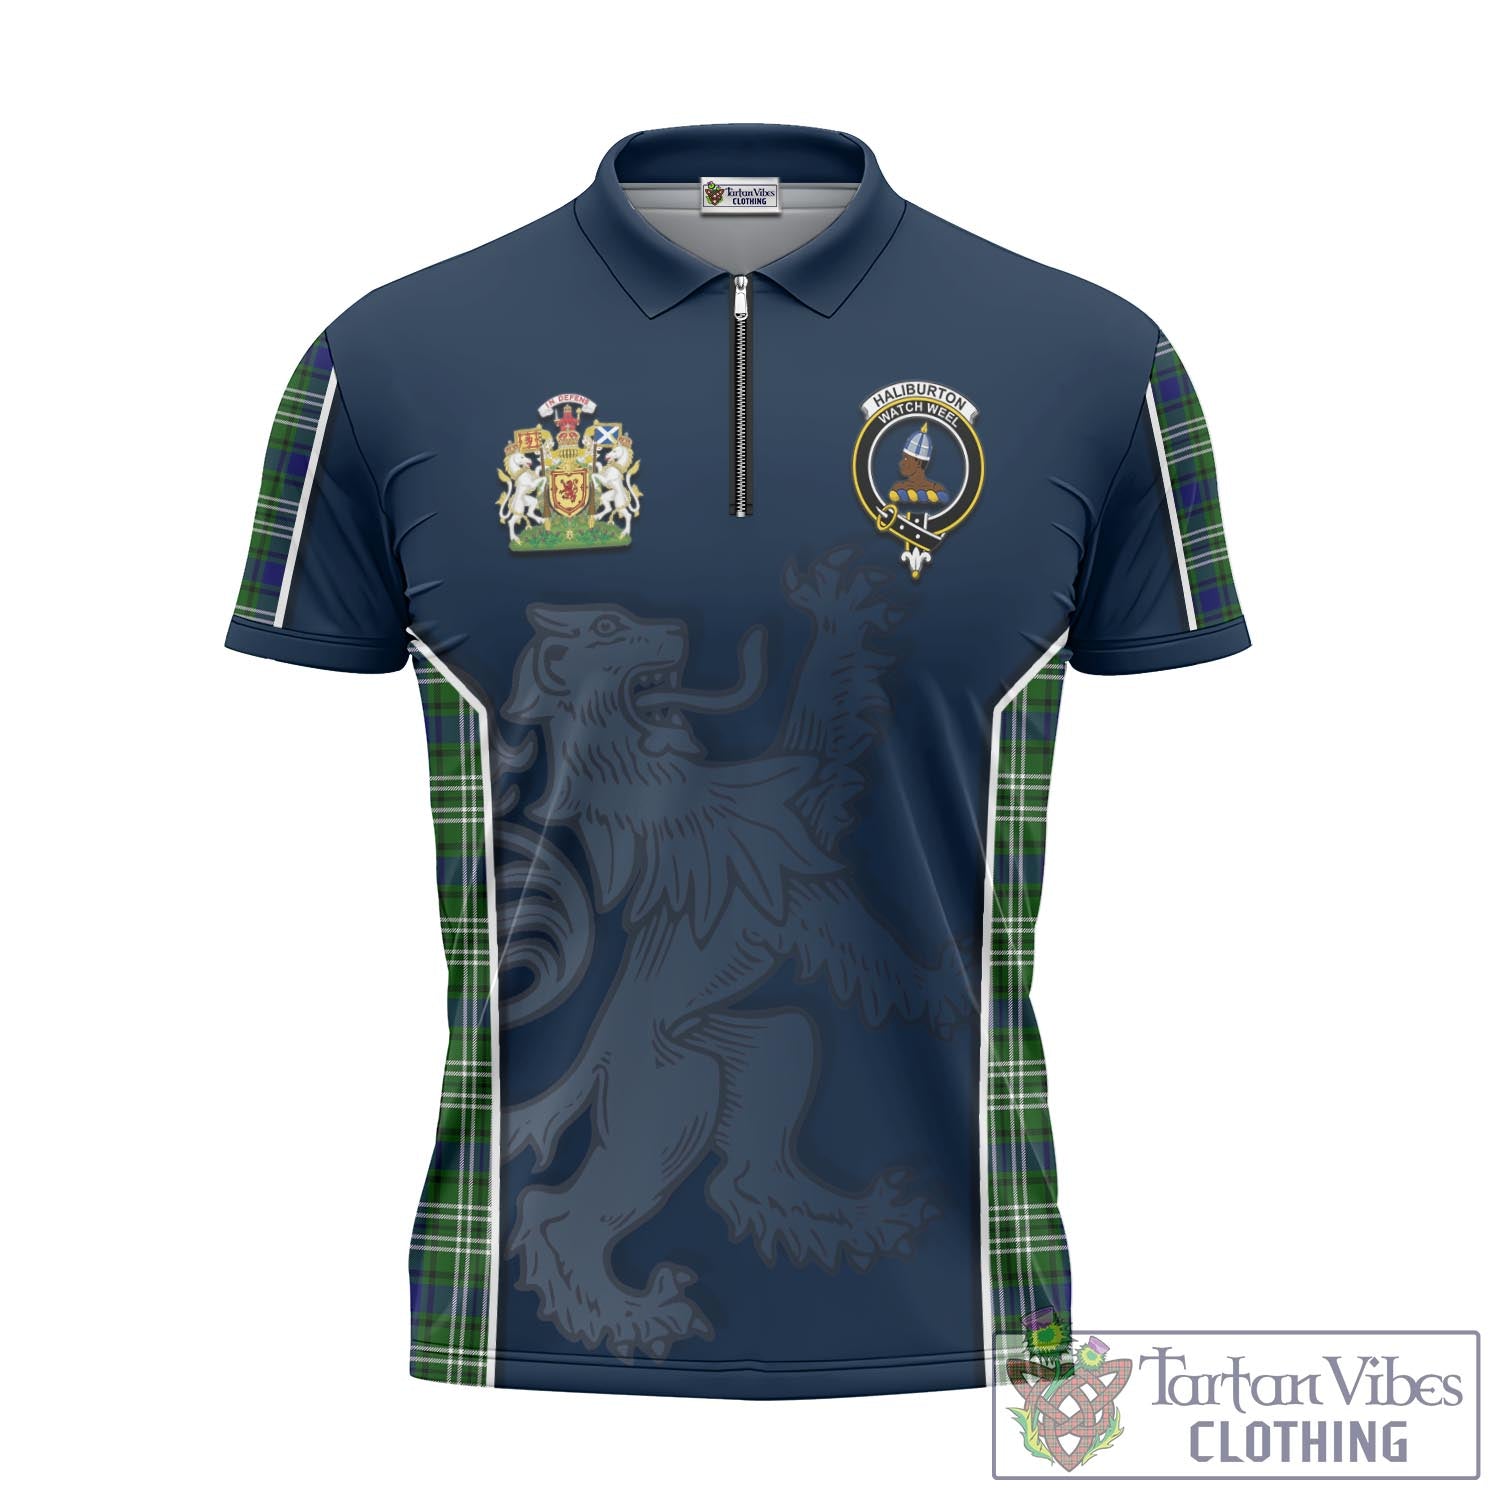 Tartan Vibes Clothing Haliburton Tartan Zipper Polo Shirt with Family Crest and Lion Rampant Vibes Sport Style